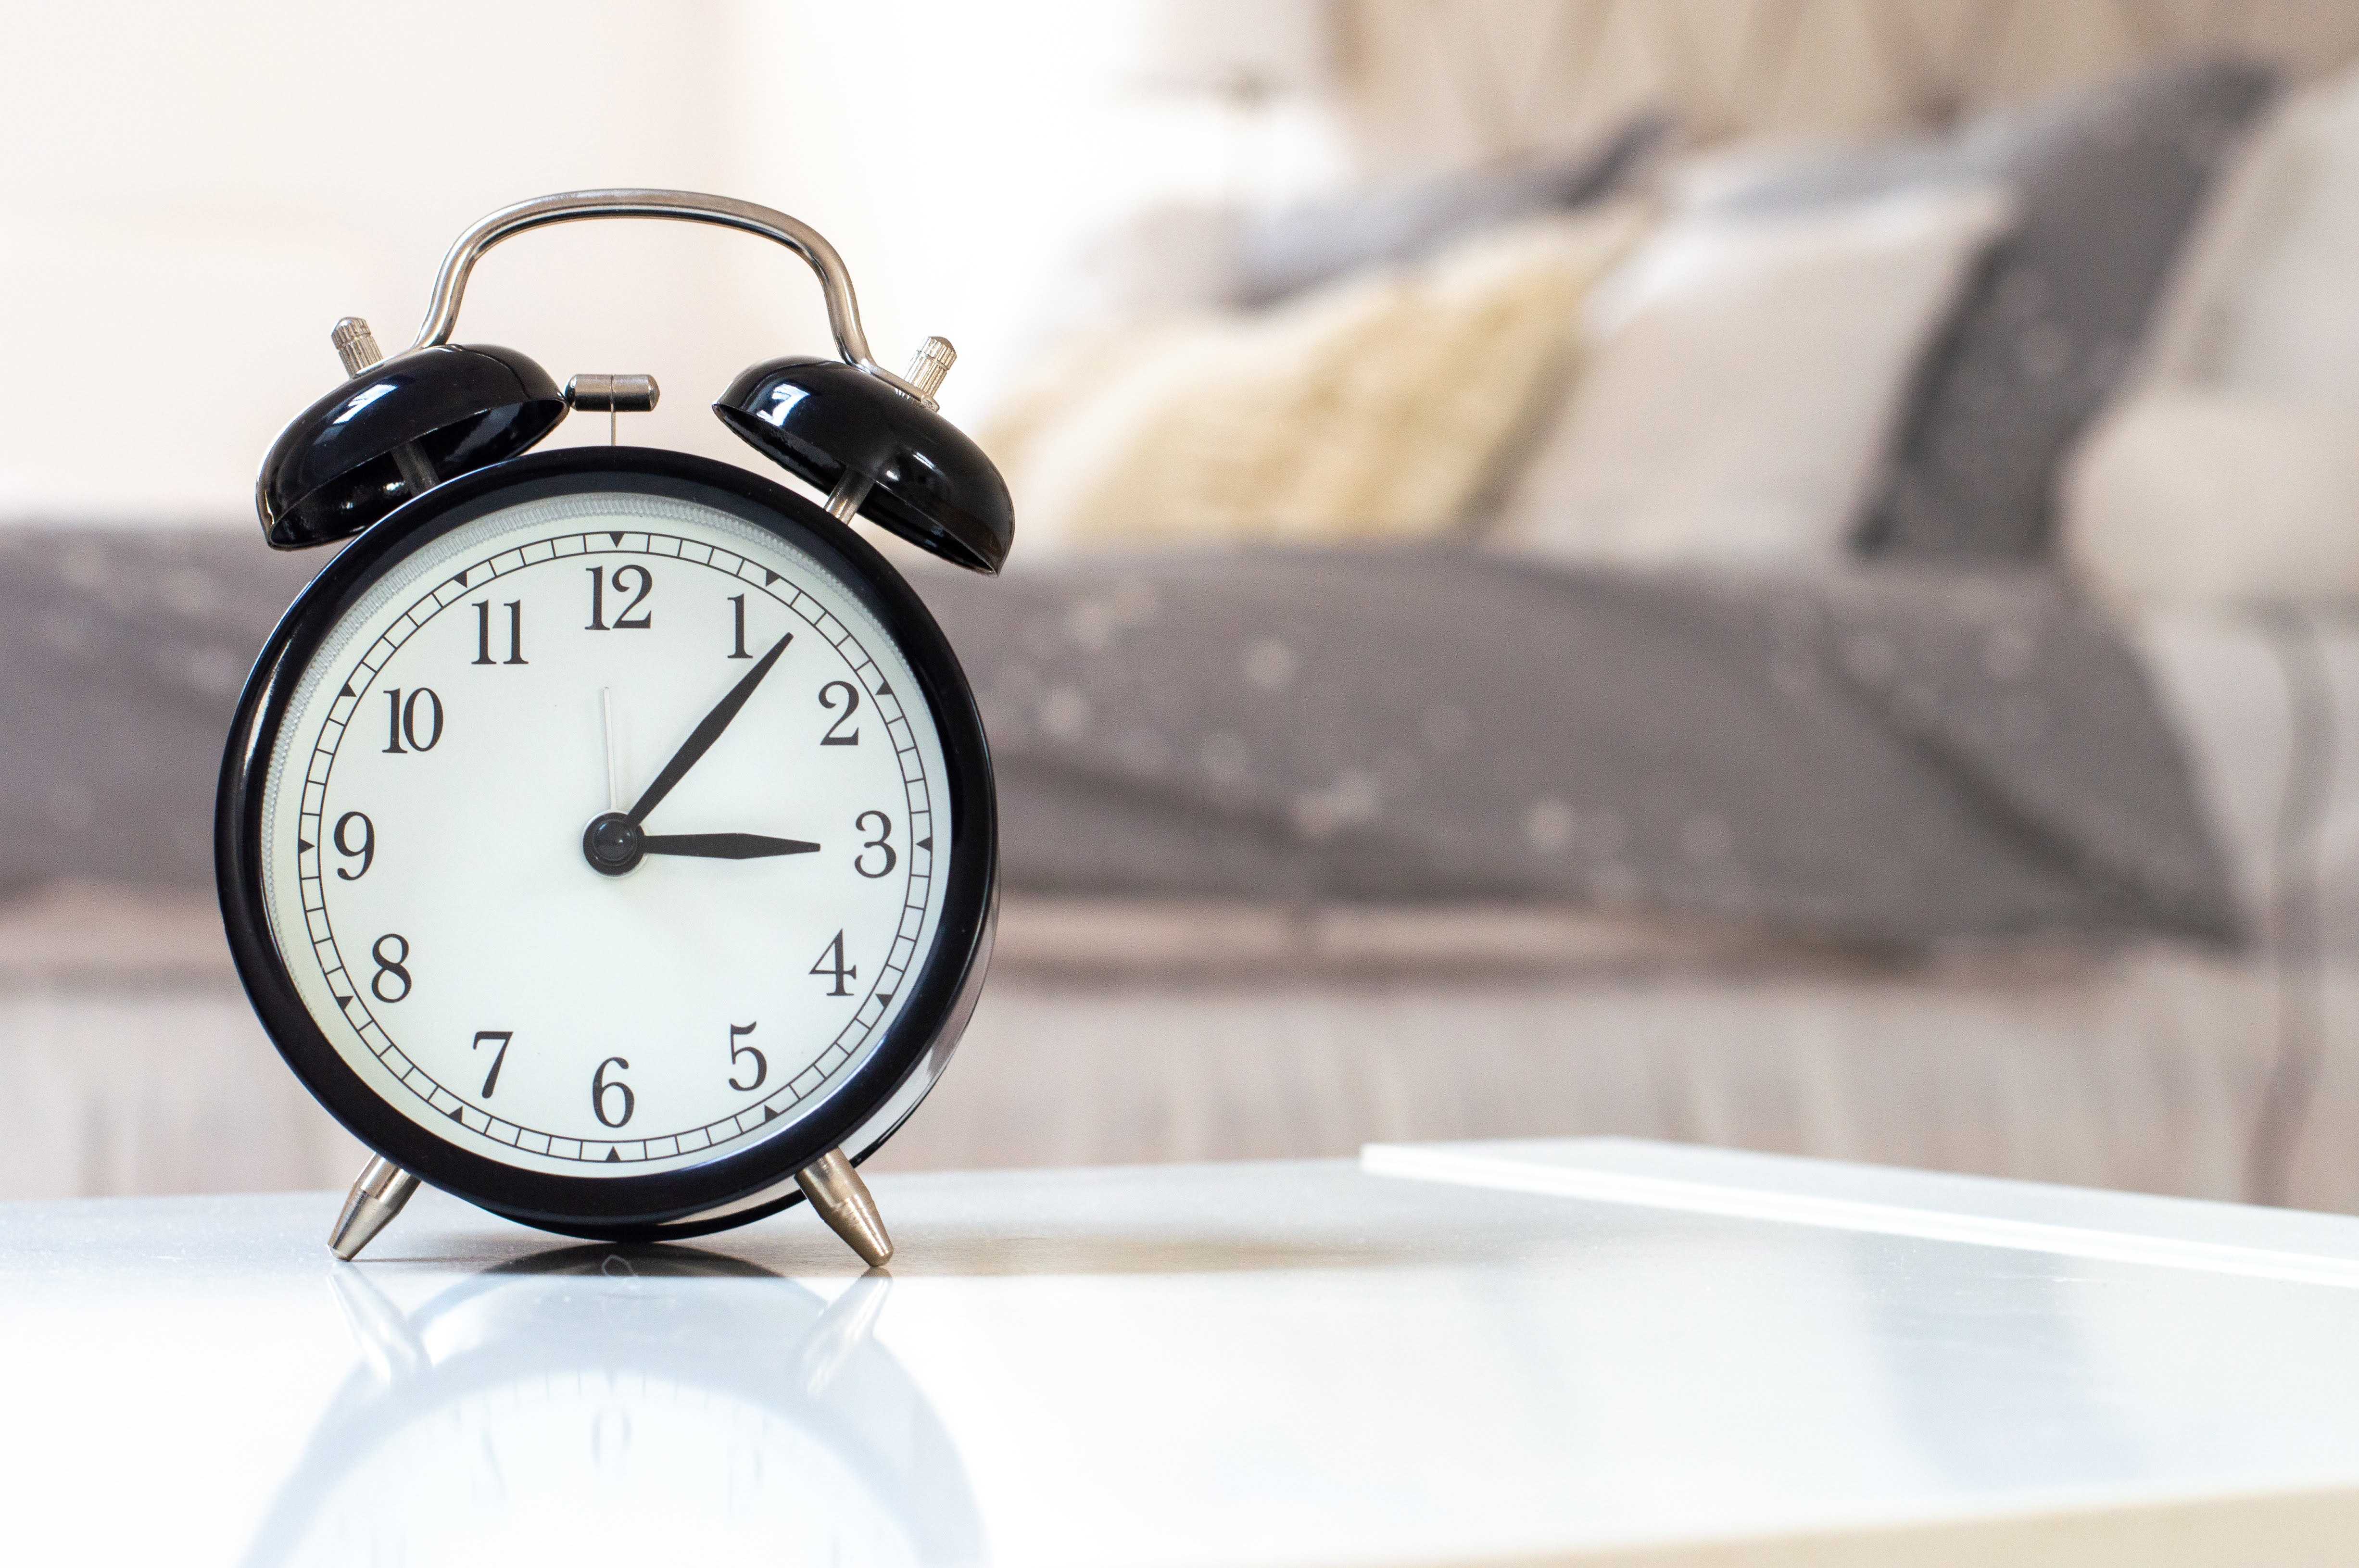 good sleep helps increase productivity at work